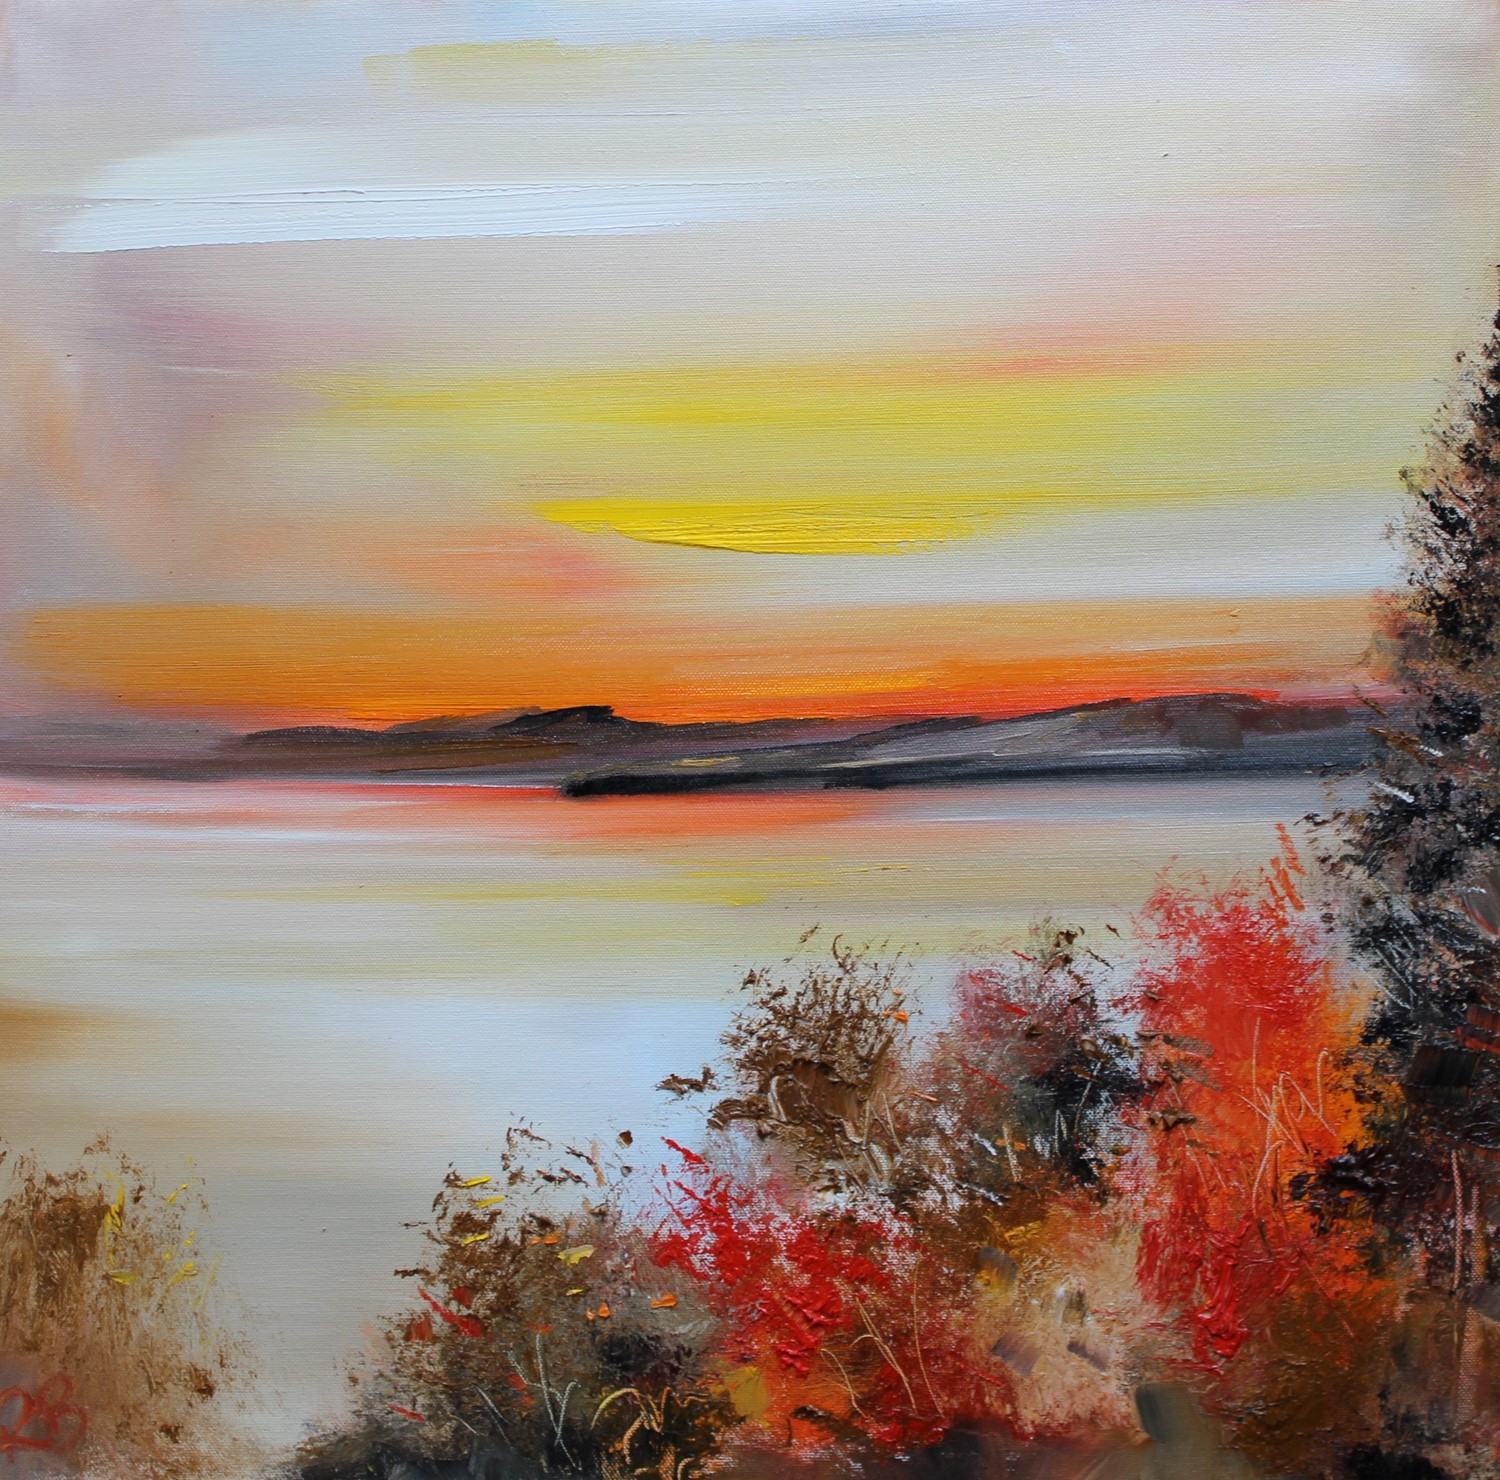 'All Still at Sunset' by artist Rosanne Barr